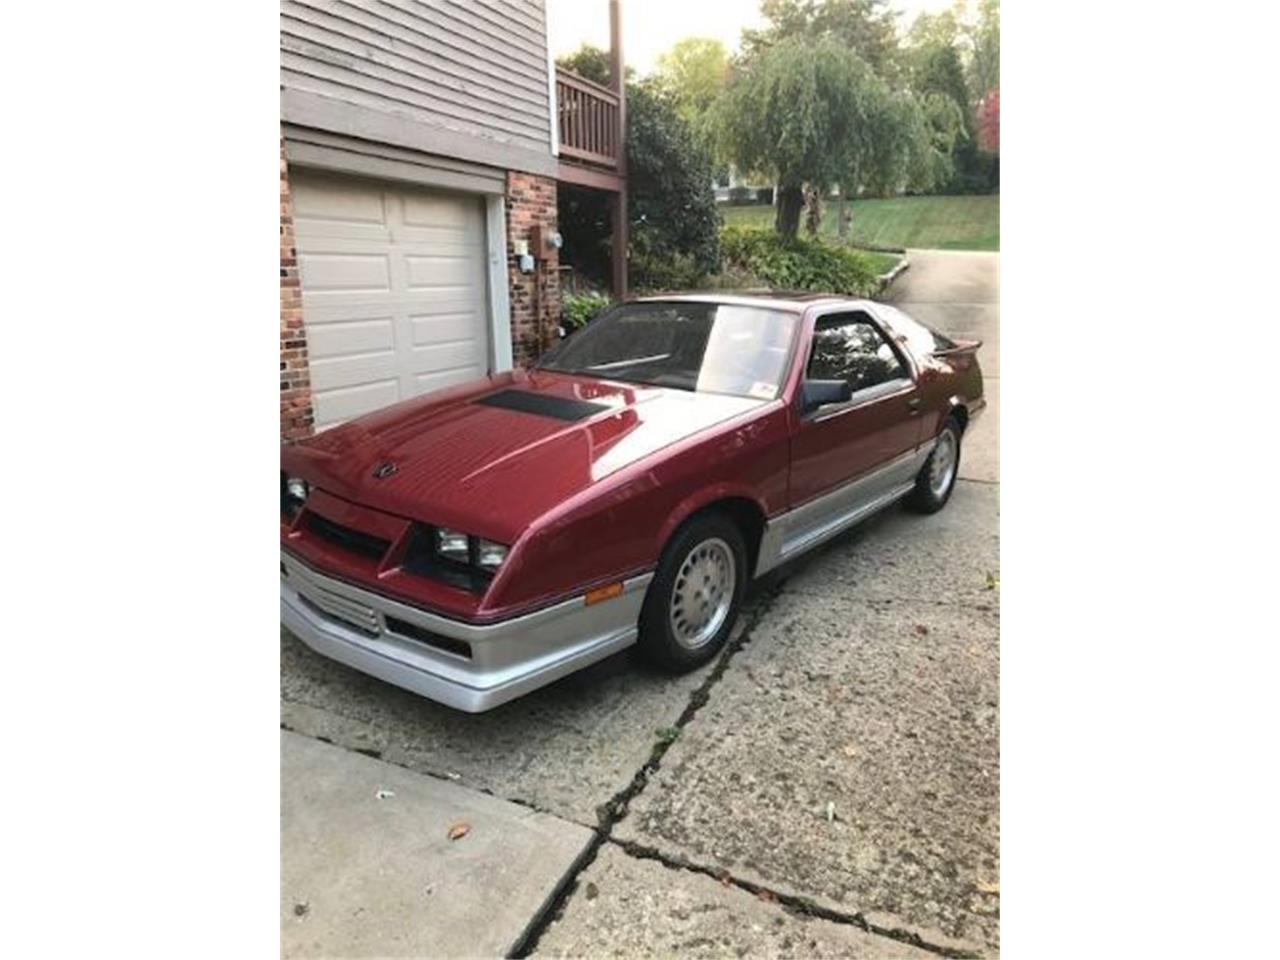 For Sale: 1984 Dodge Daytona in Cadillac, Michigan for sale in Cadillac, MI